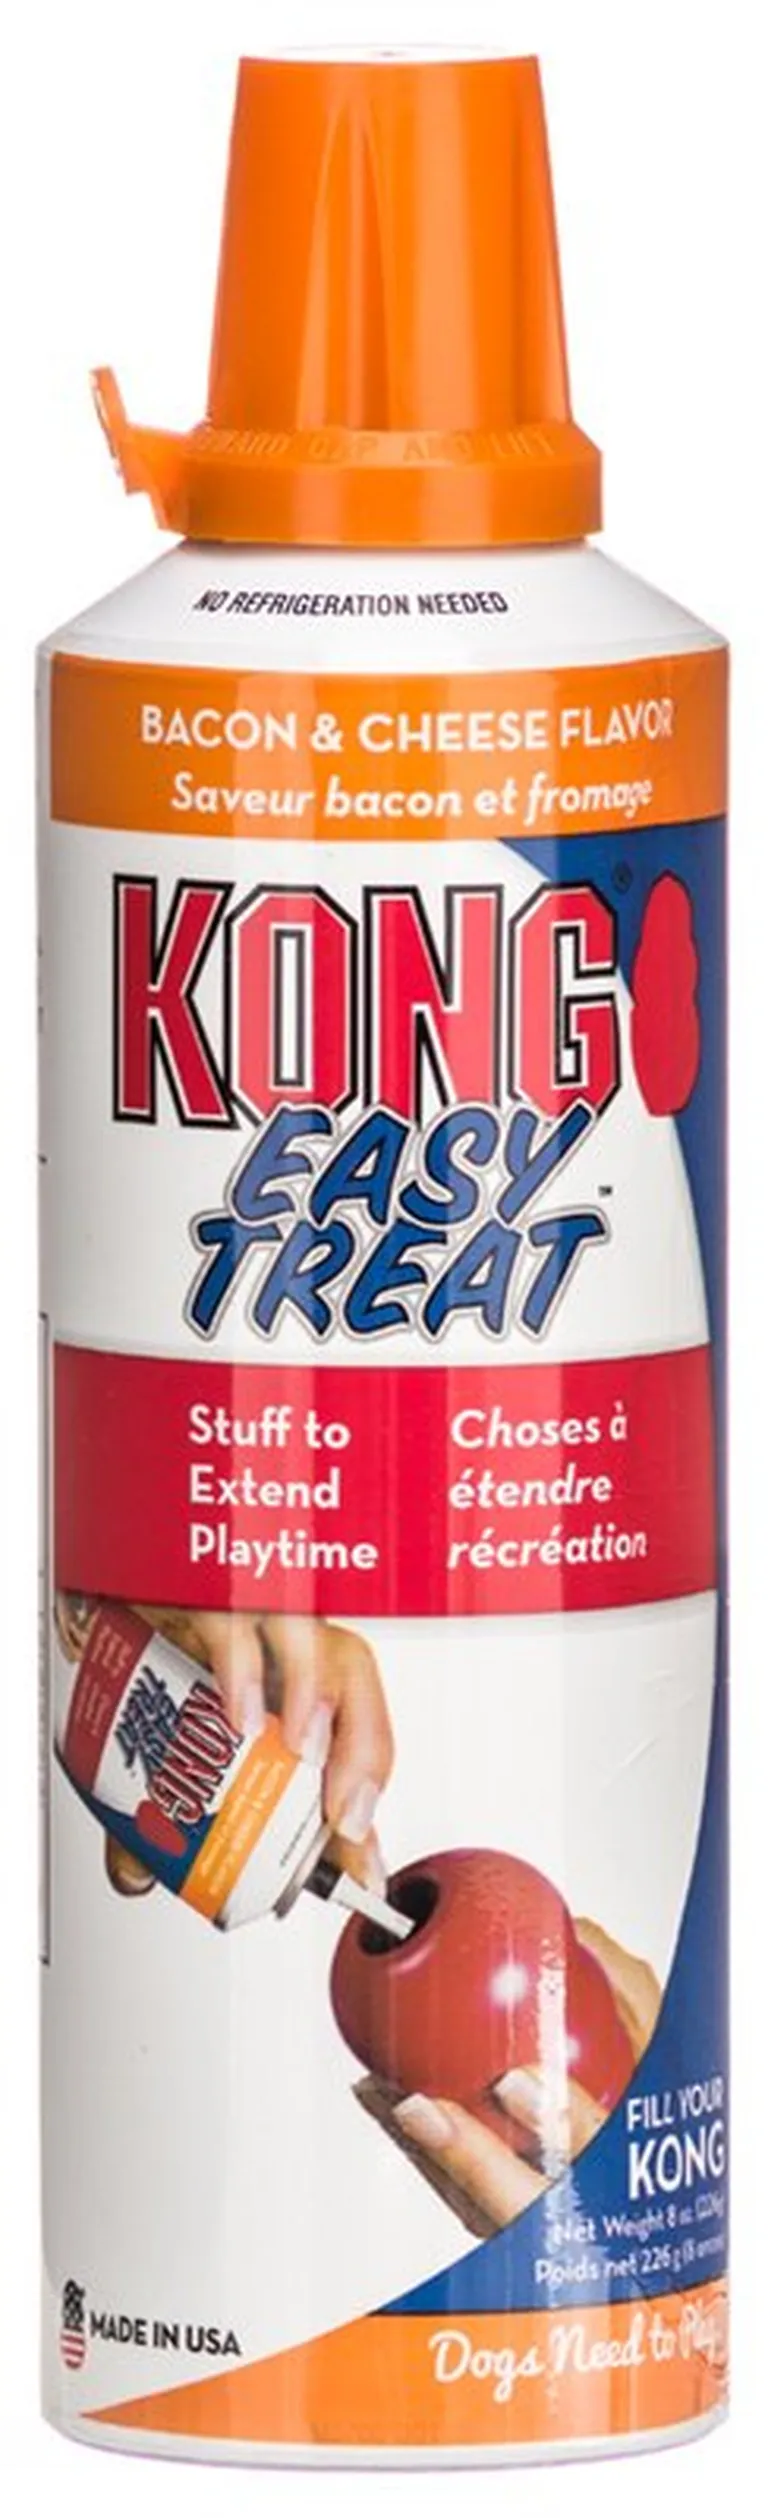 Kong Stuff'n Easy Treat - Bacon & Cheese Recipe Photo 1